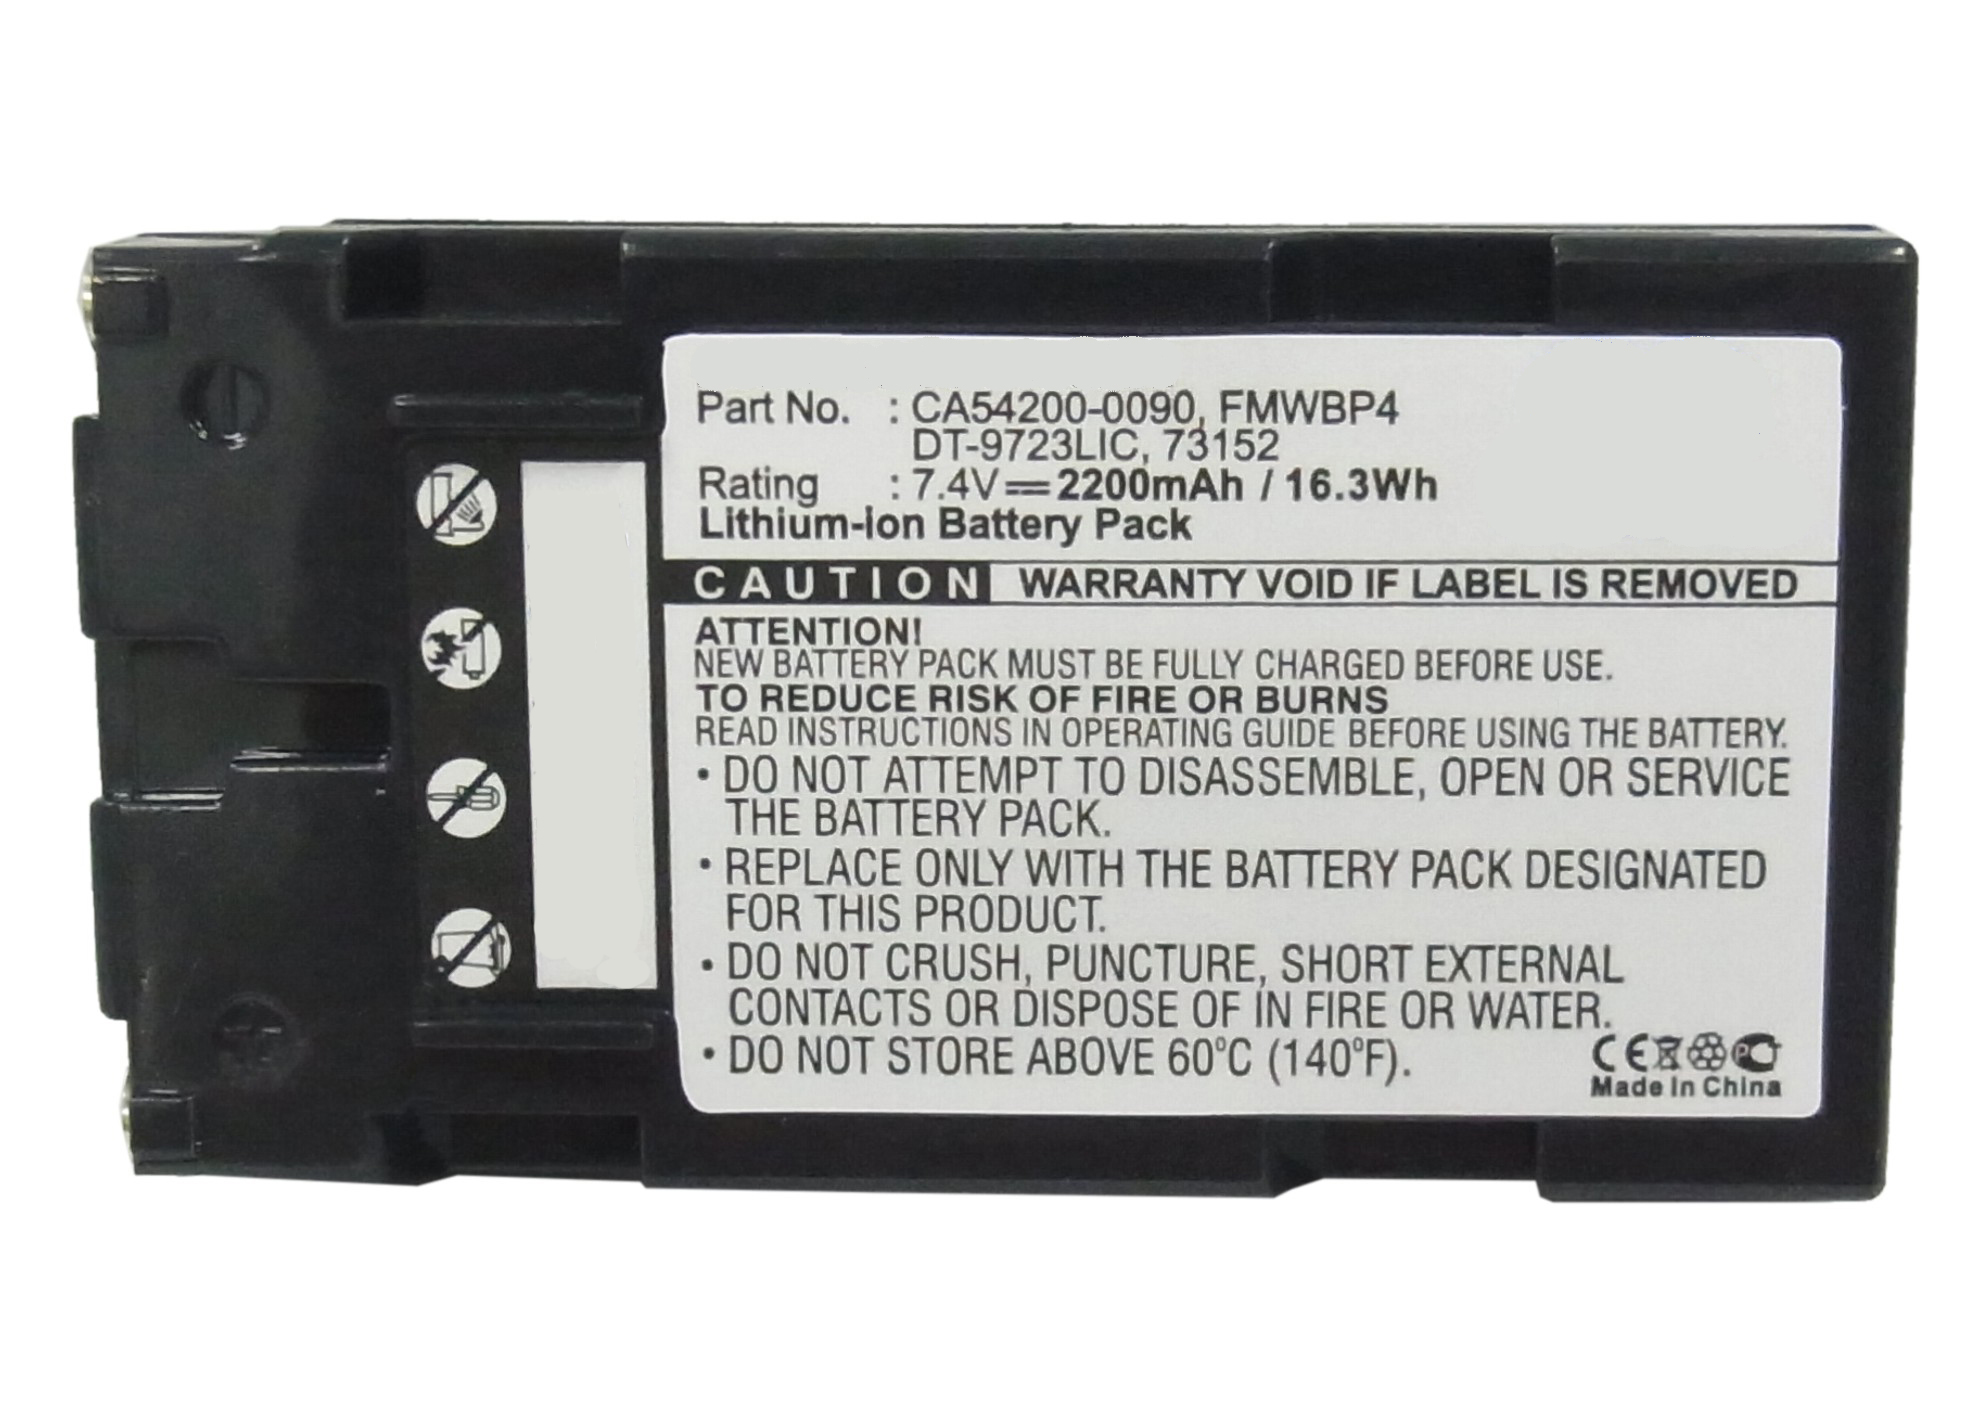 Batteries for AntaresBarcode Scanner